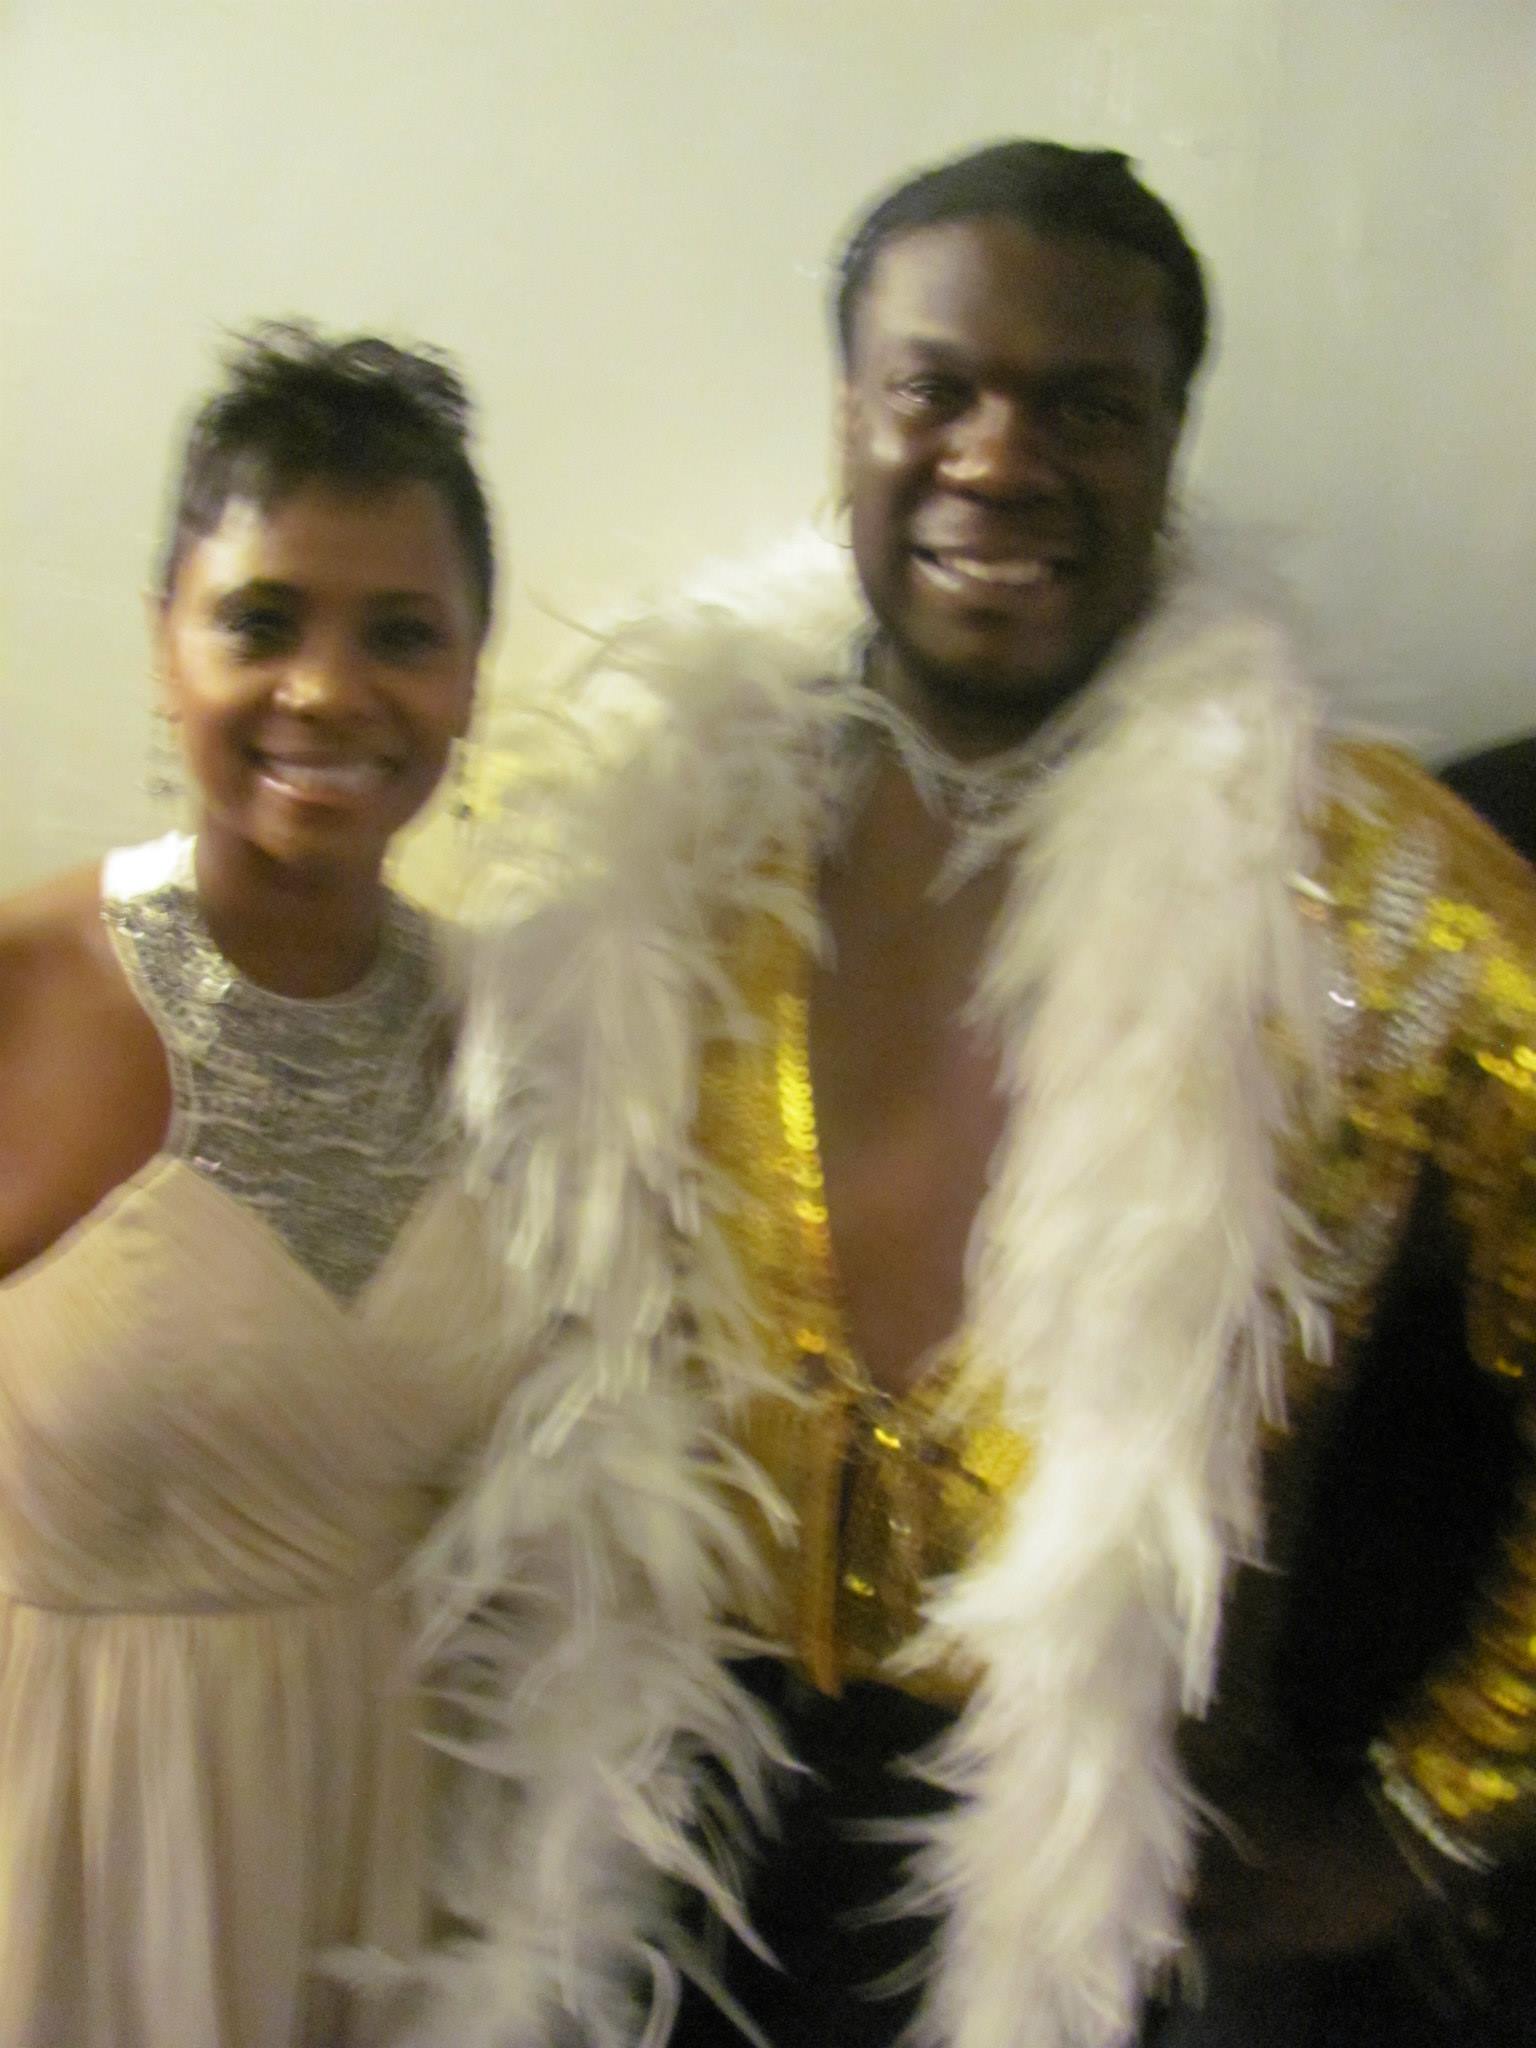 Tony Davis and Karen Malina White at The NAACP Awards 2013